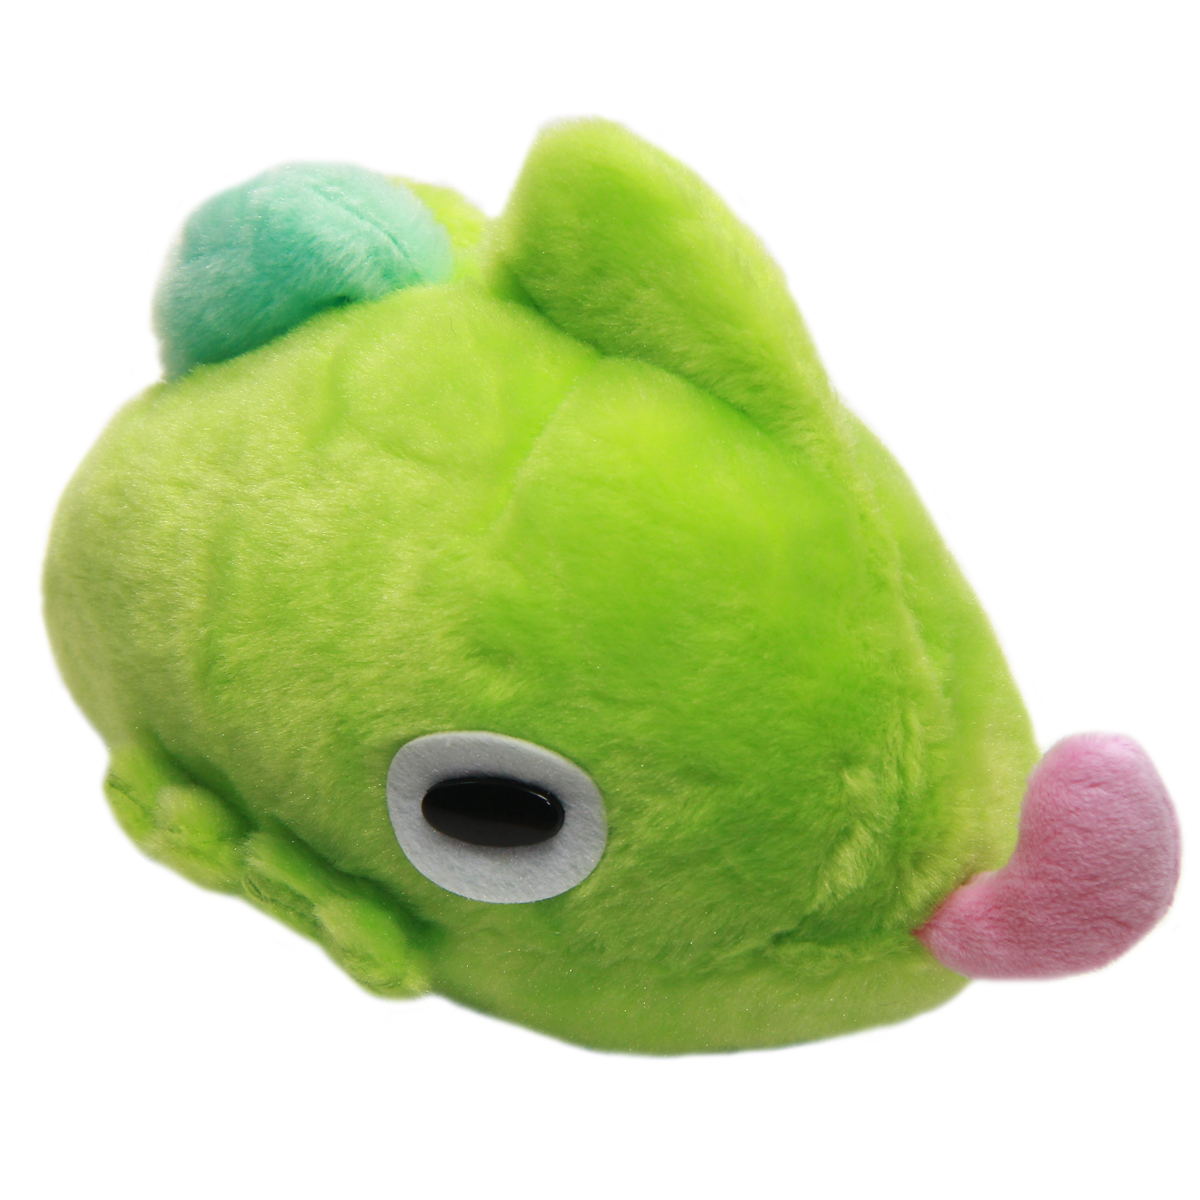 Chameleon Plush Doll Super Soft Squishy Stuffed Animal Toy Green BIG Size 17 Inches